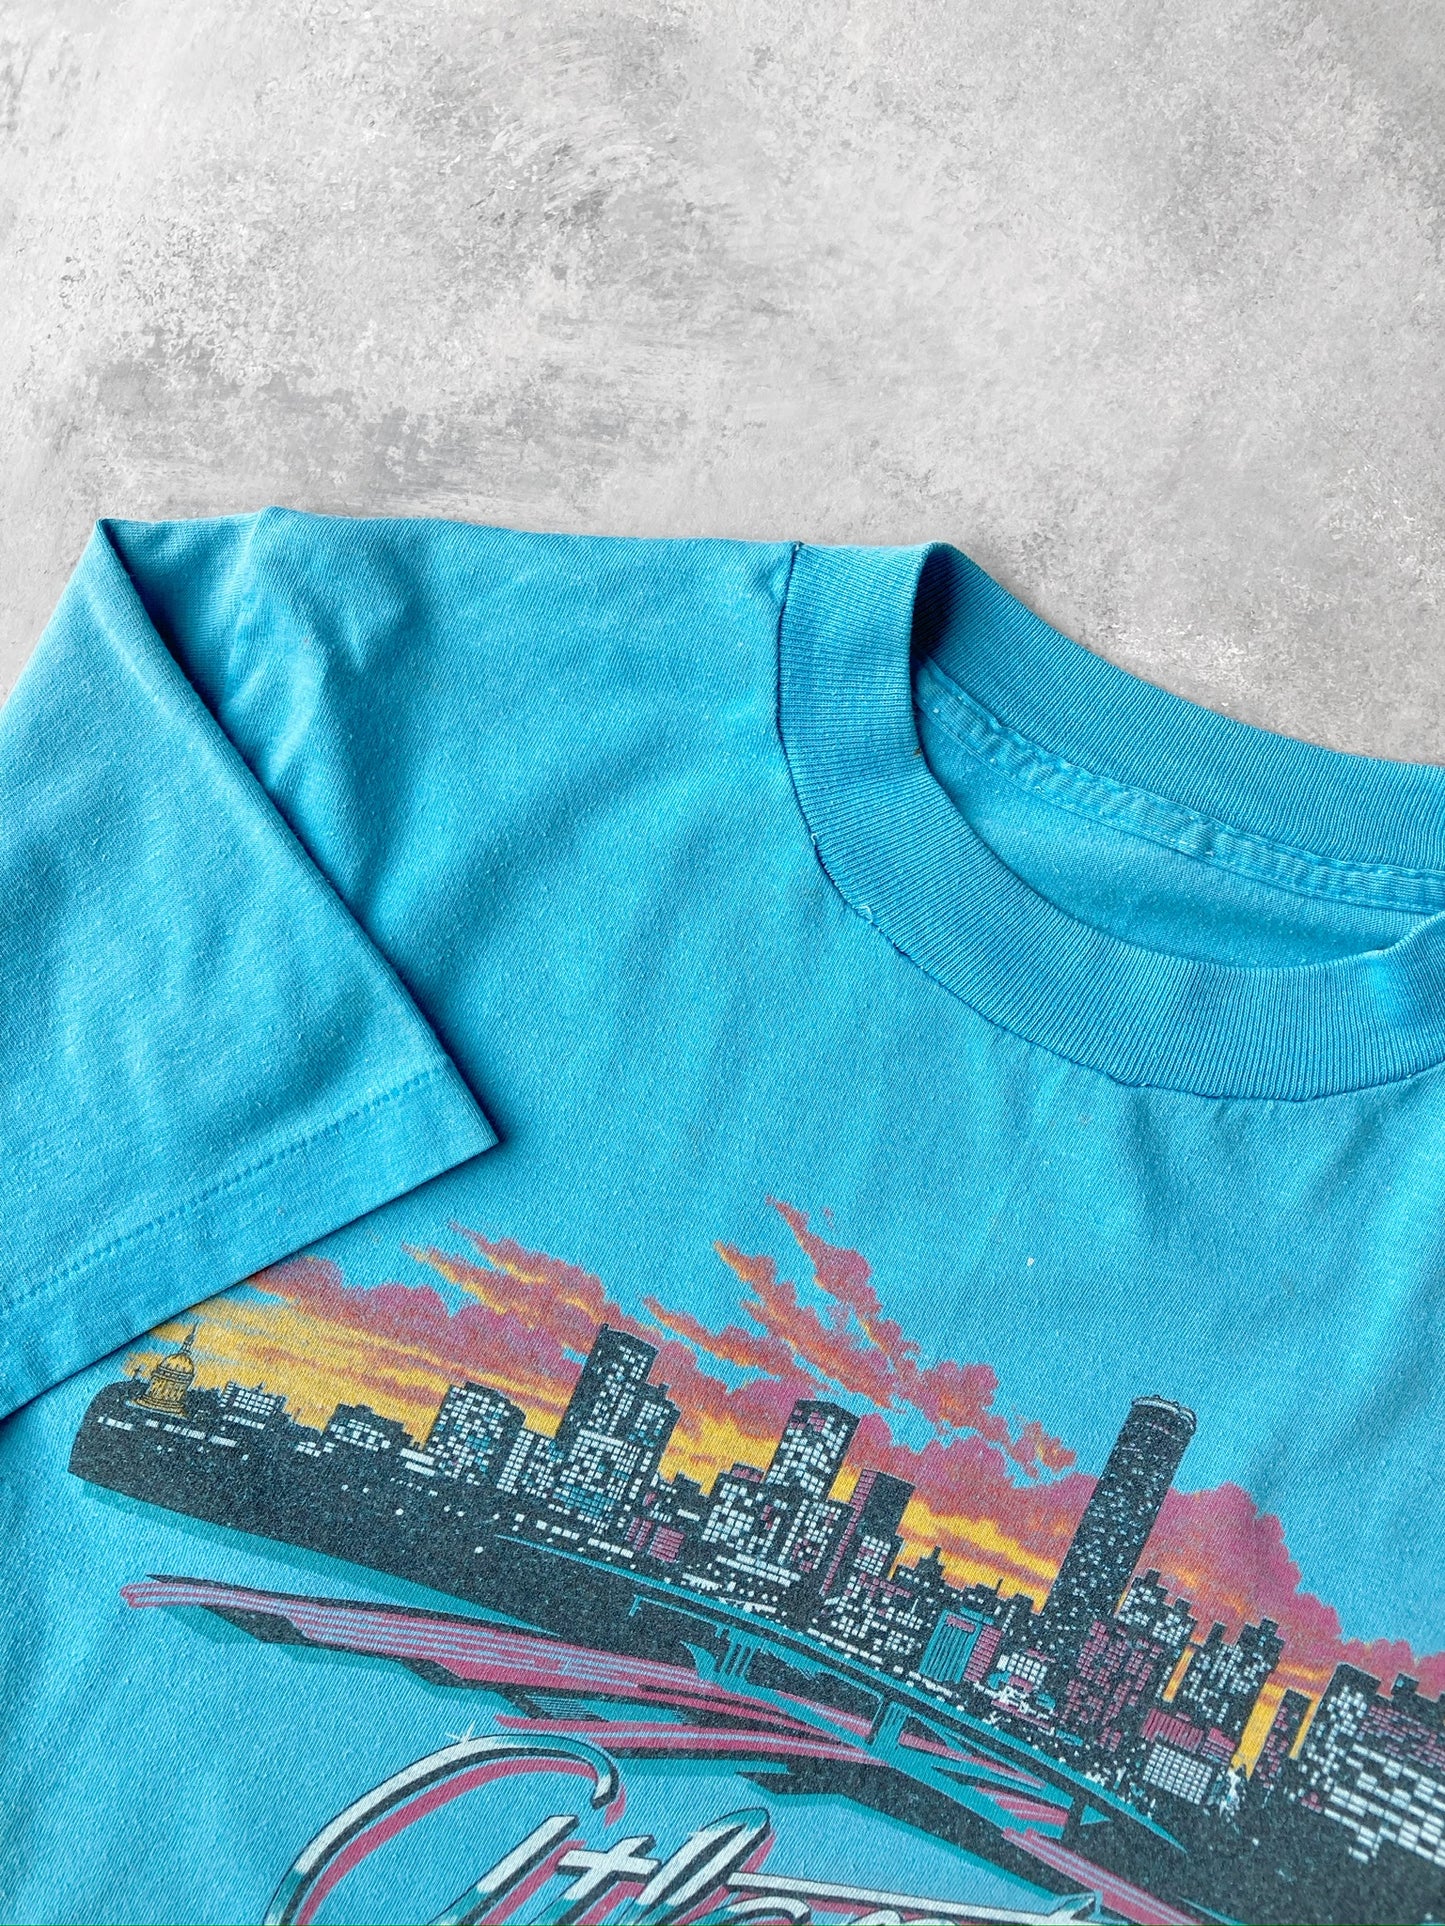 Atlanta GA T-Shirt '84 - Small / Medium